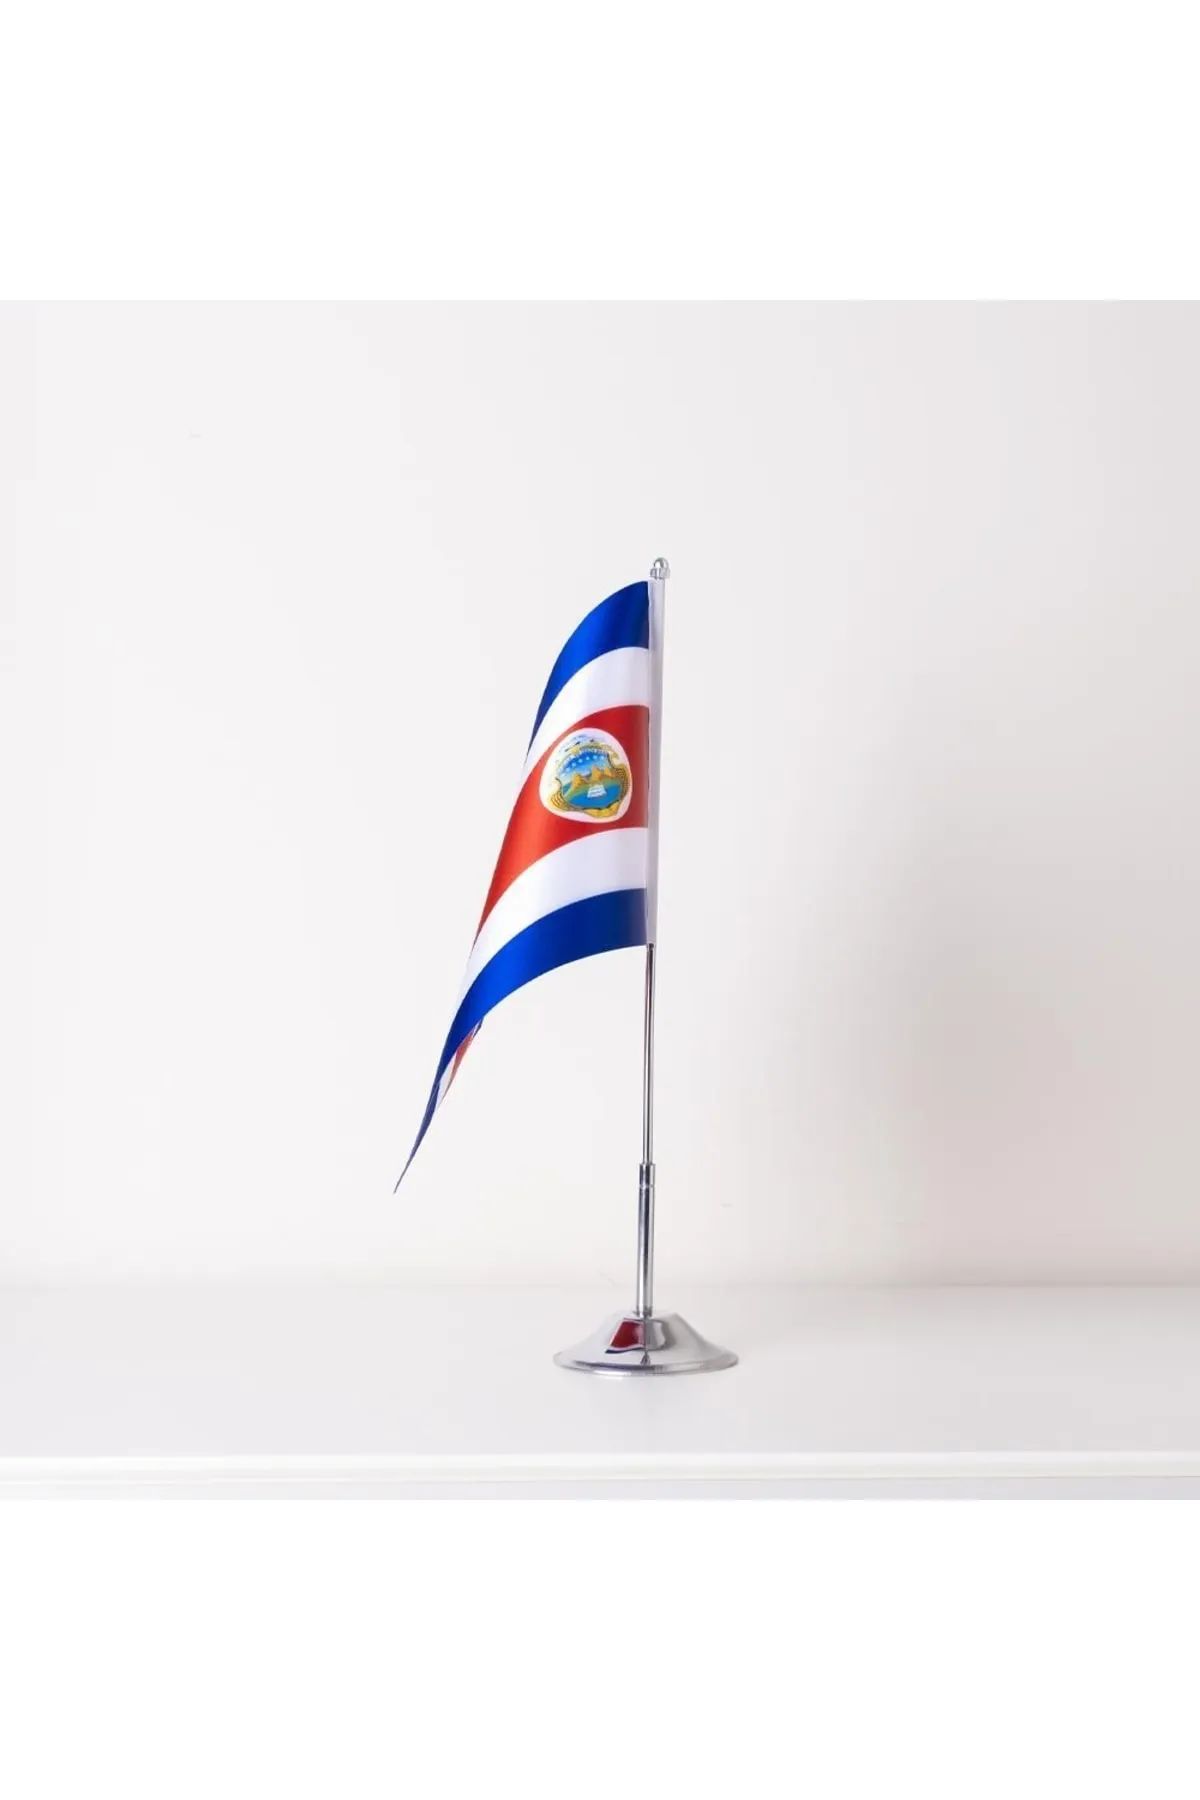 ZC Bayrak Kosta Rika Tekli Masa Bayrağı Saten Kumaş Dijital Baskı 15x22,5 Cm